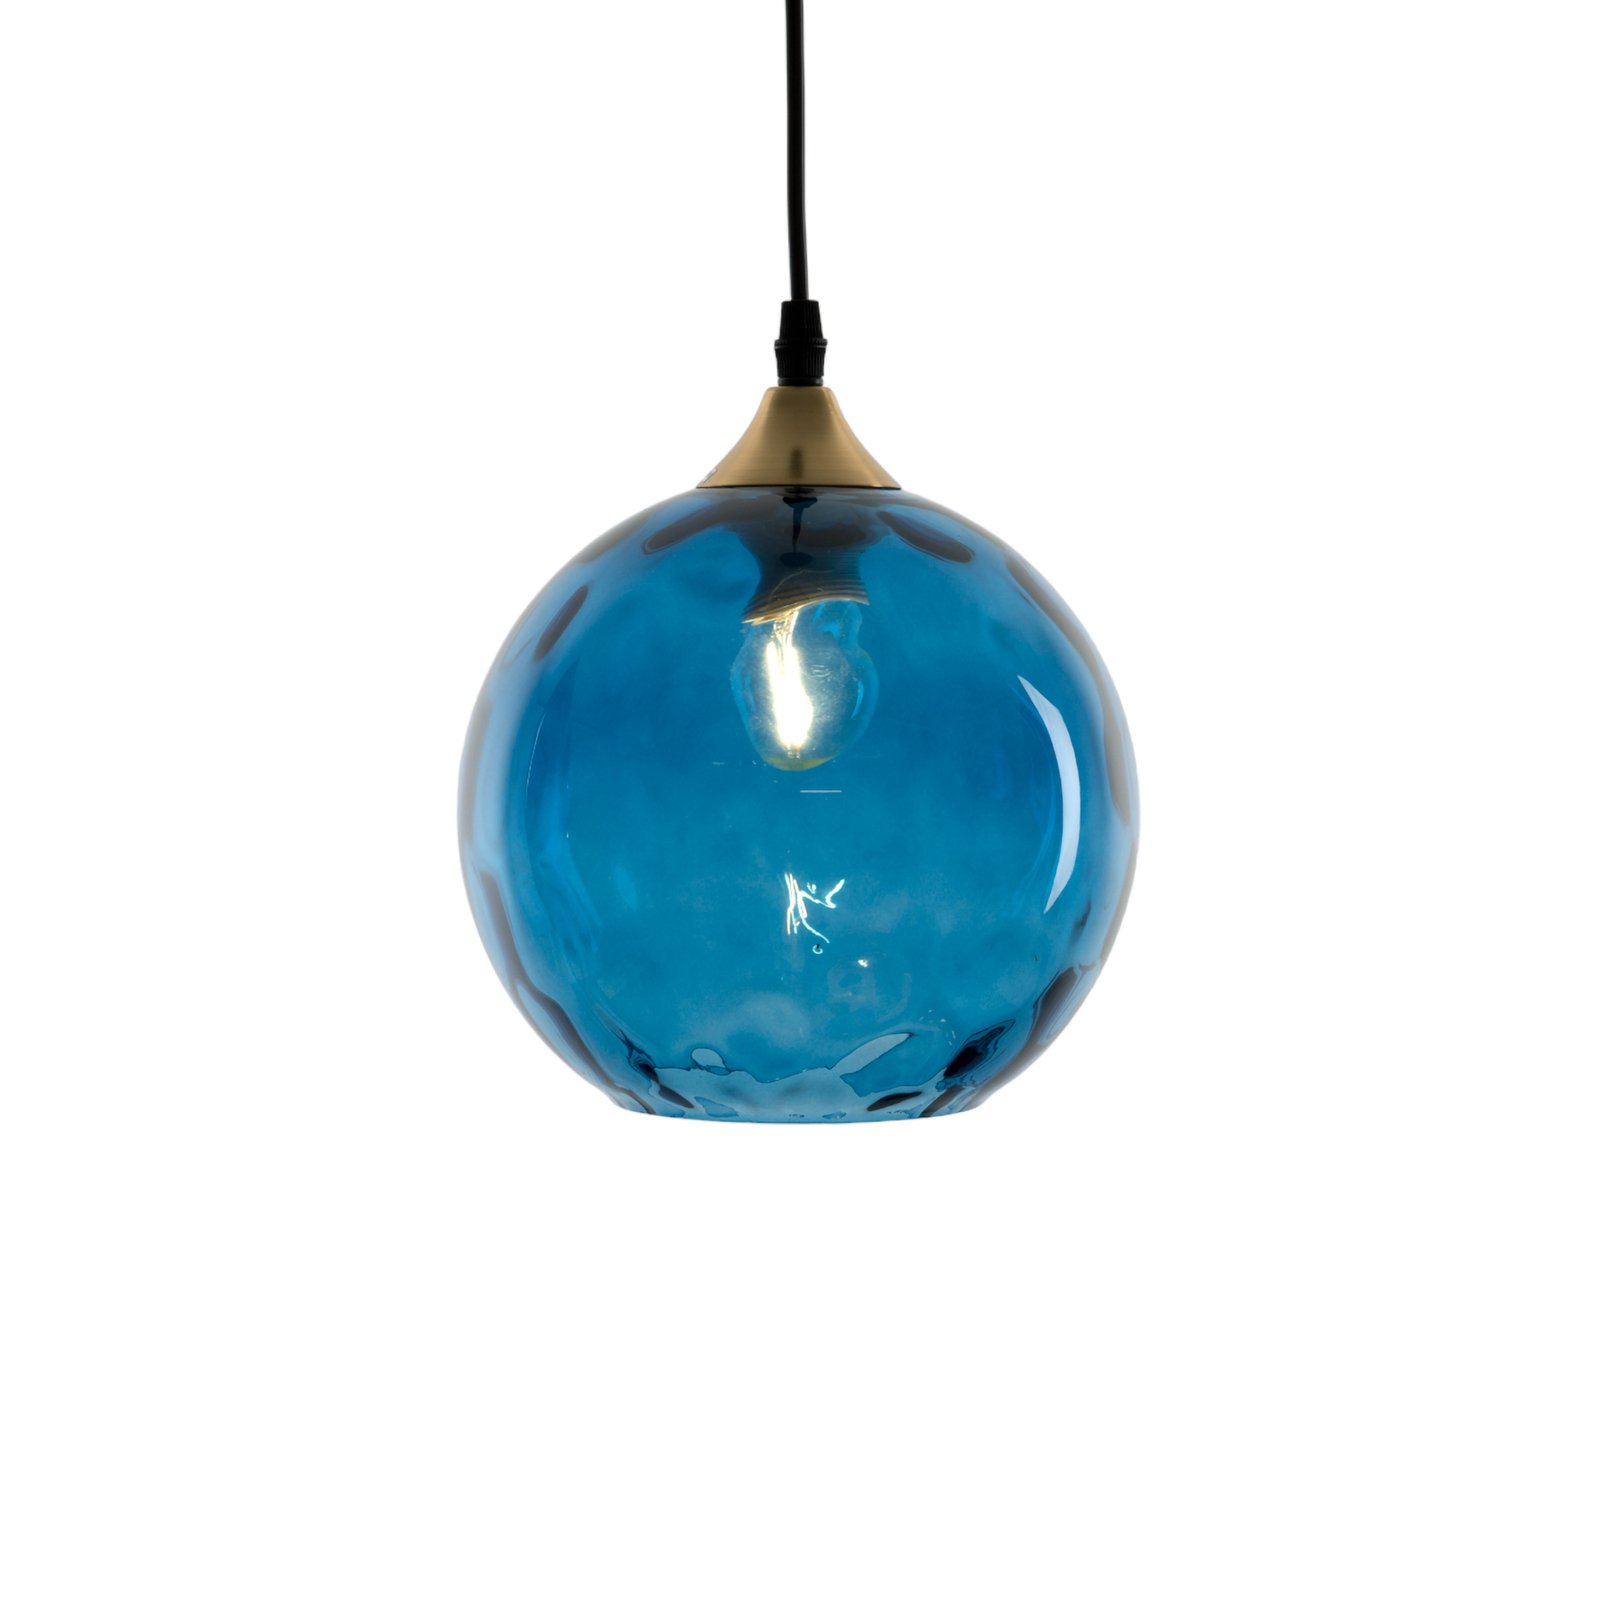 Cagliari pendant light 1-bulb glass lampshade blue